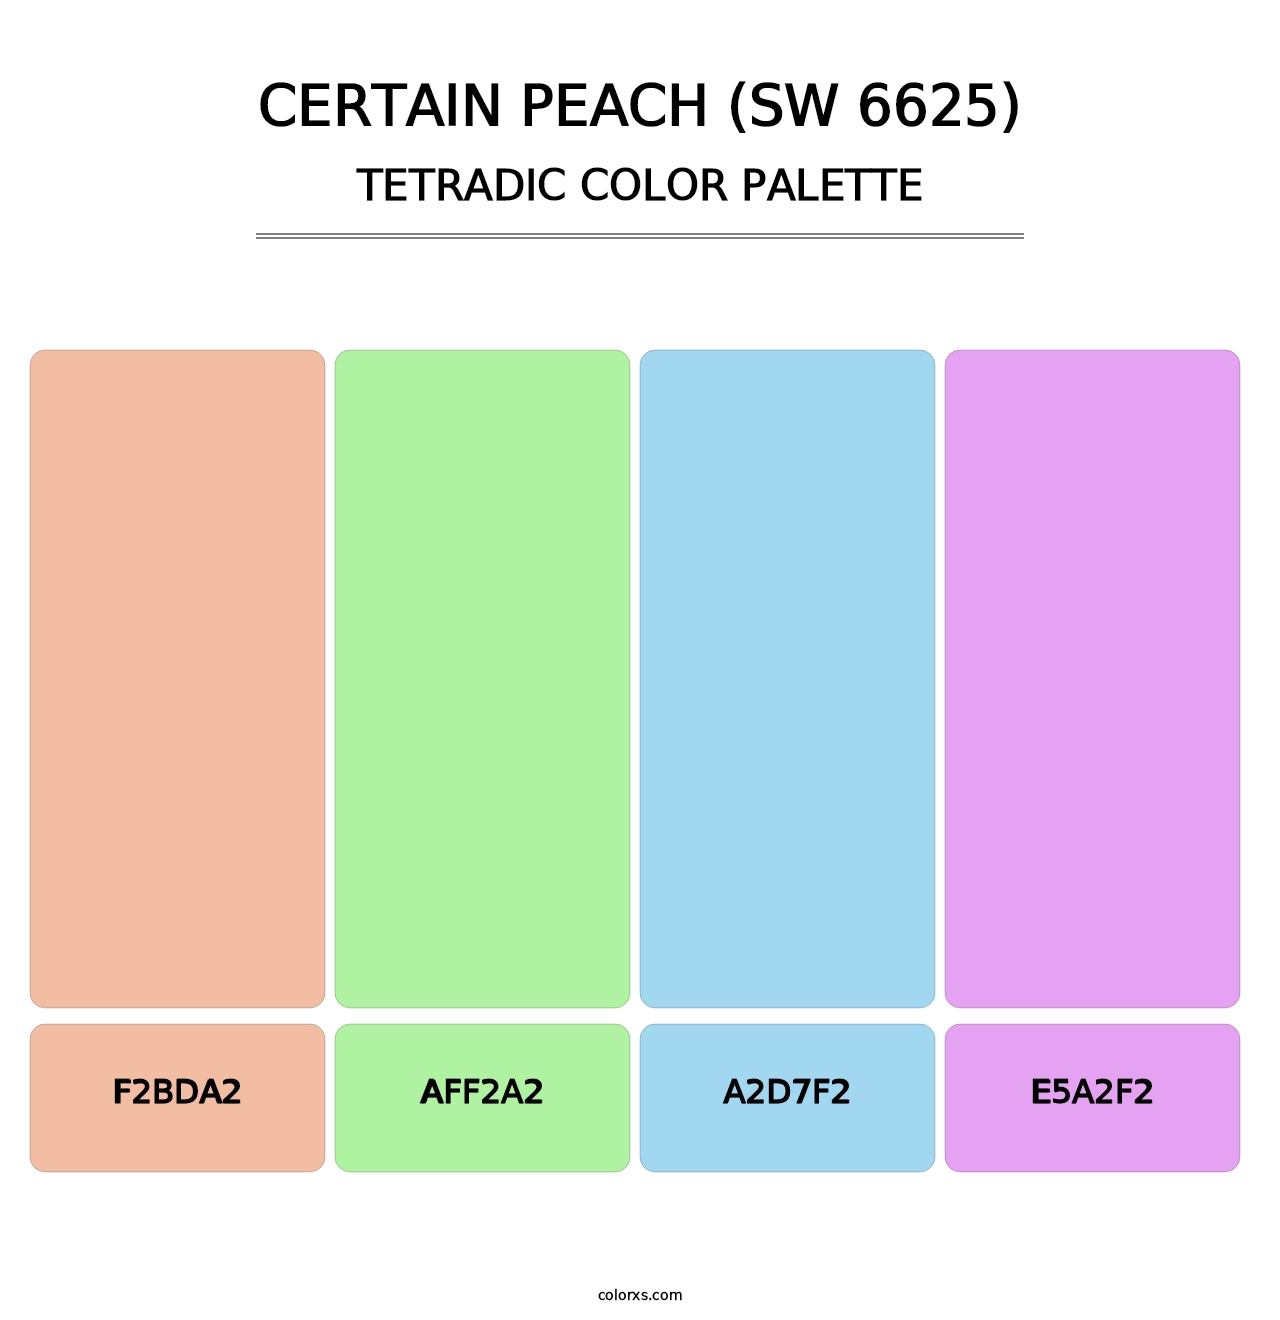 Certain Peach (SW 6625) - Tetradic Color Palette